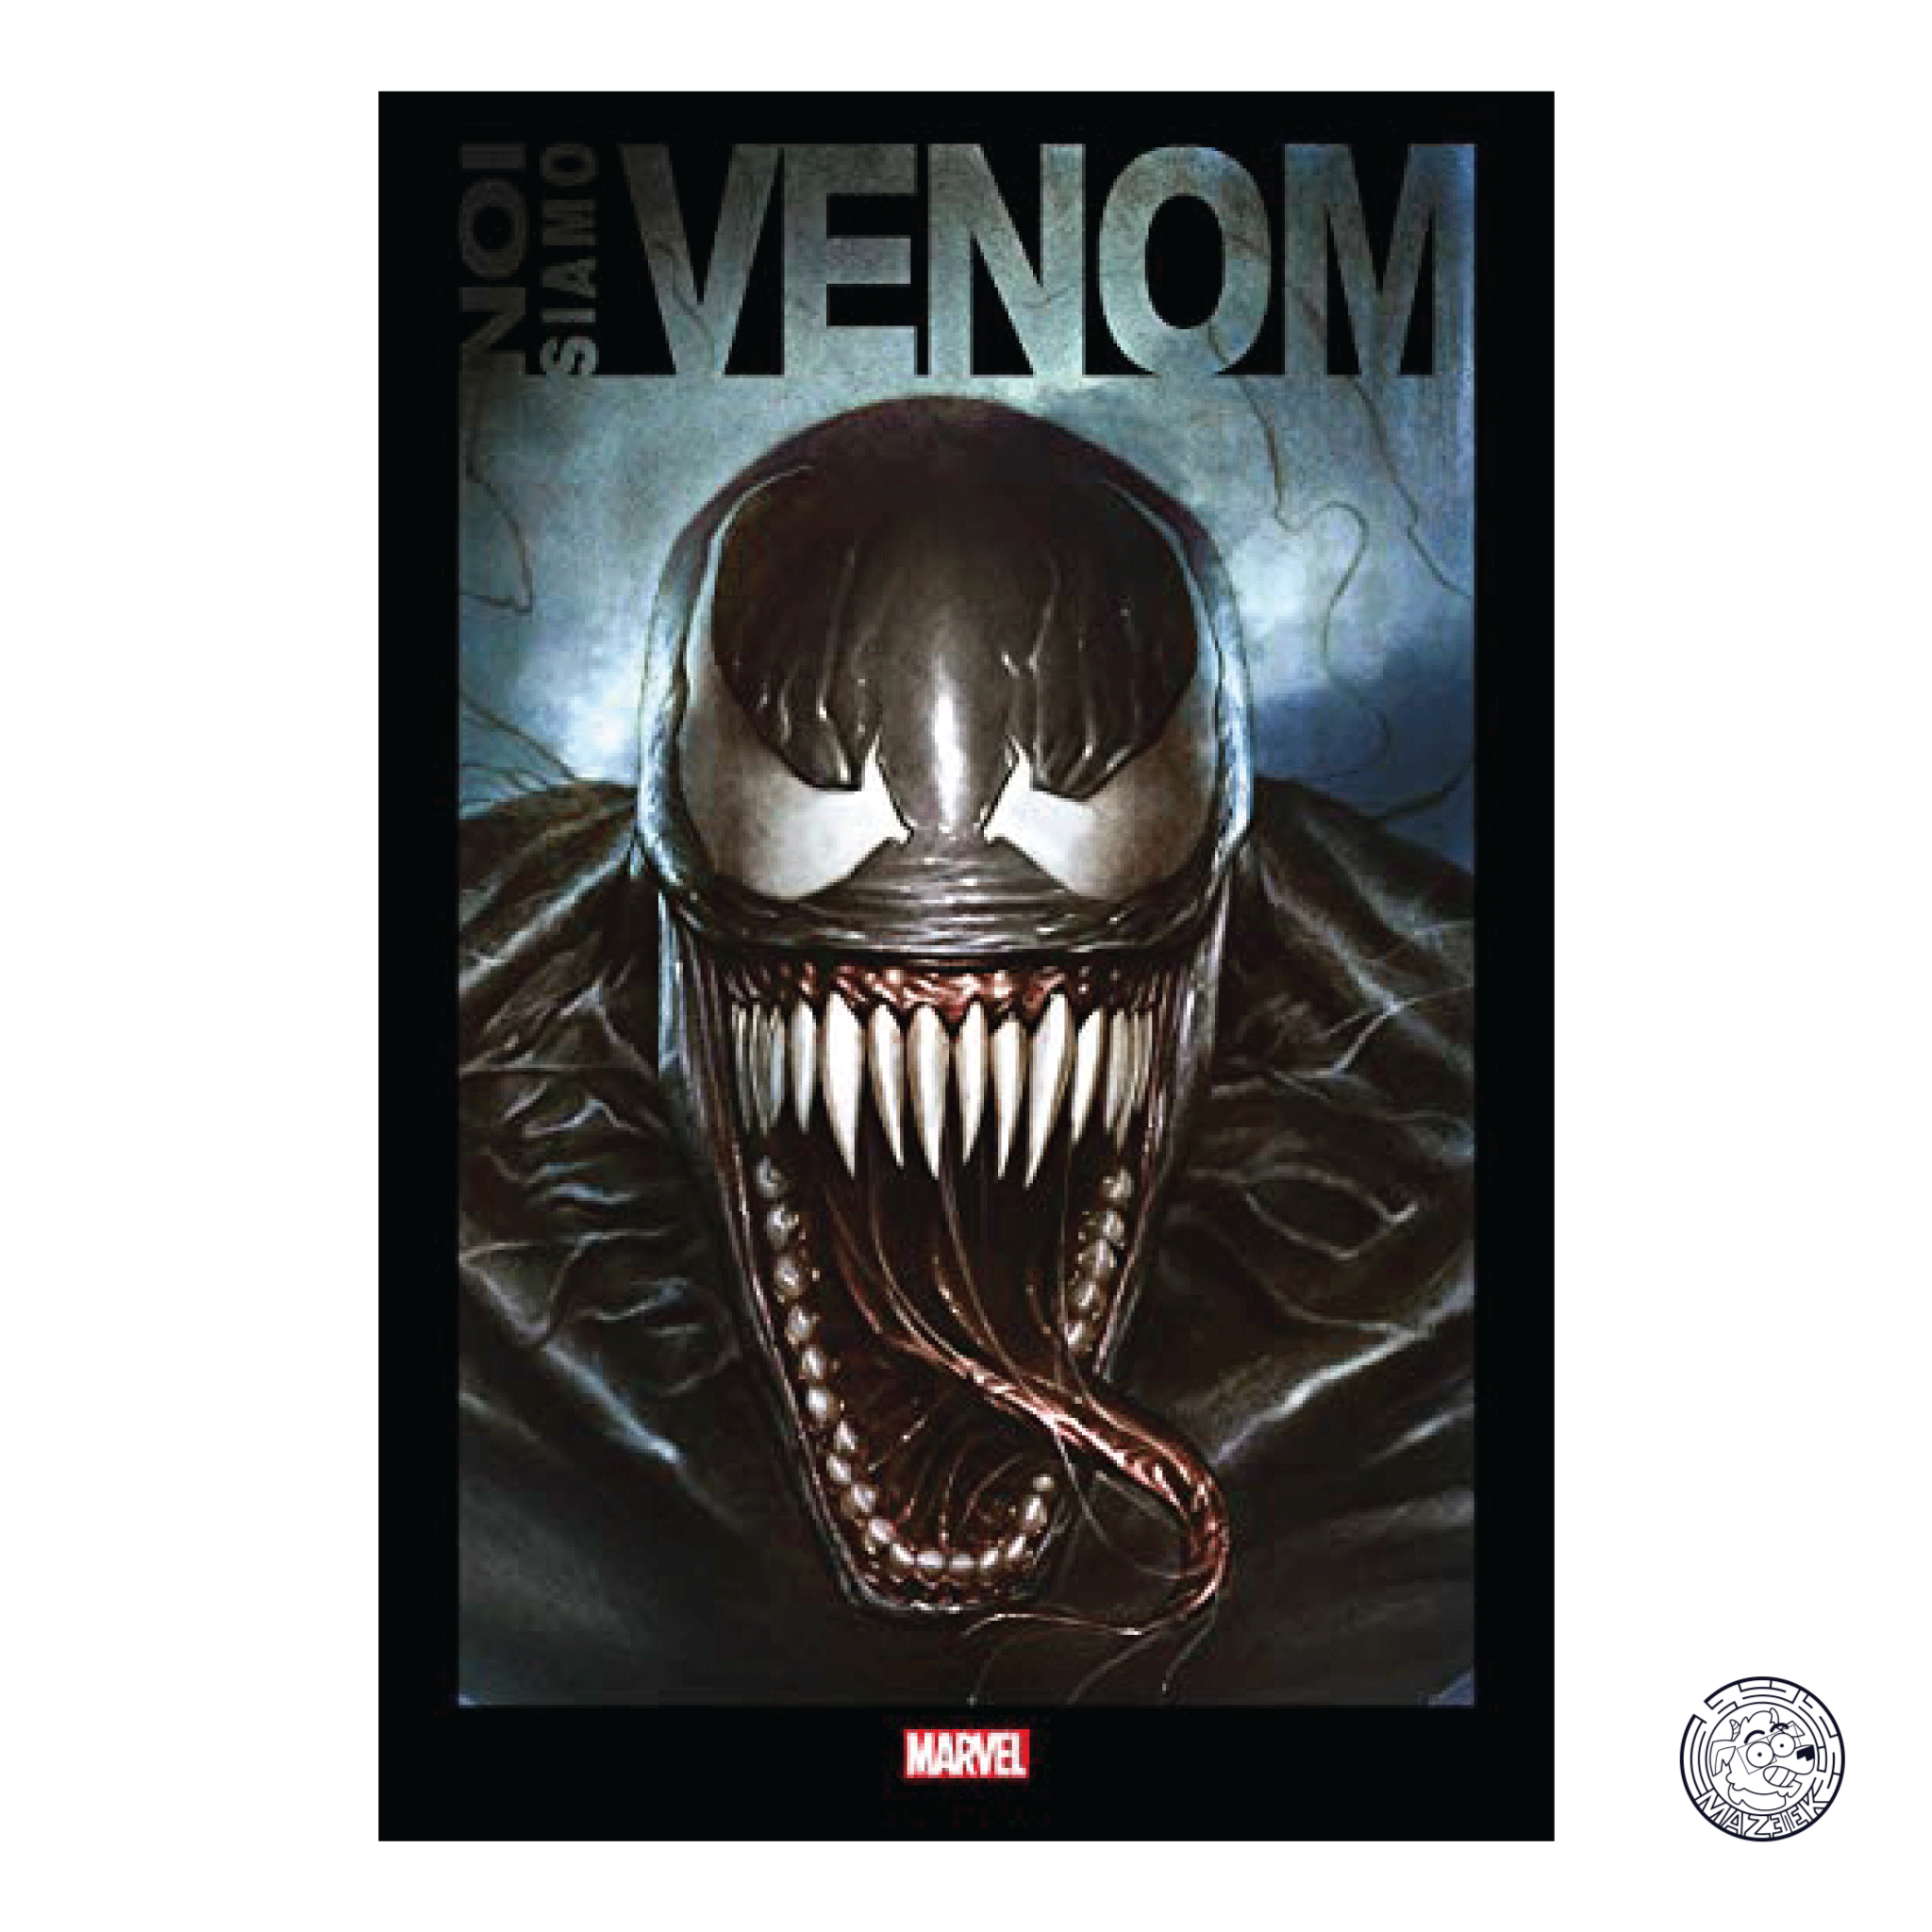 We Are Venom - Reprint 1